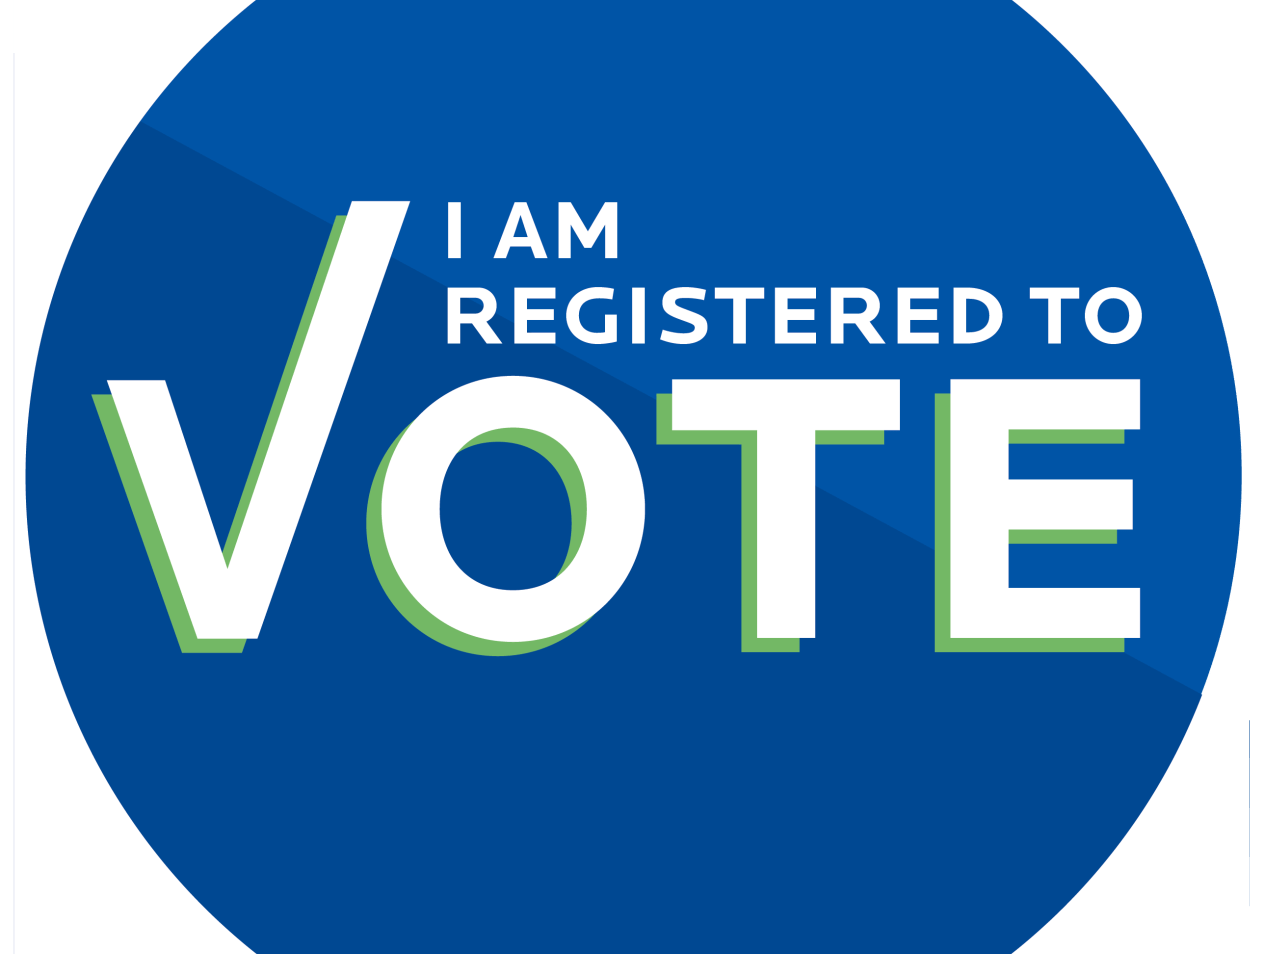 I am registered to vote